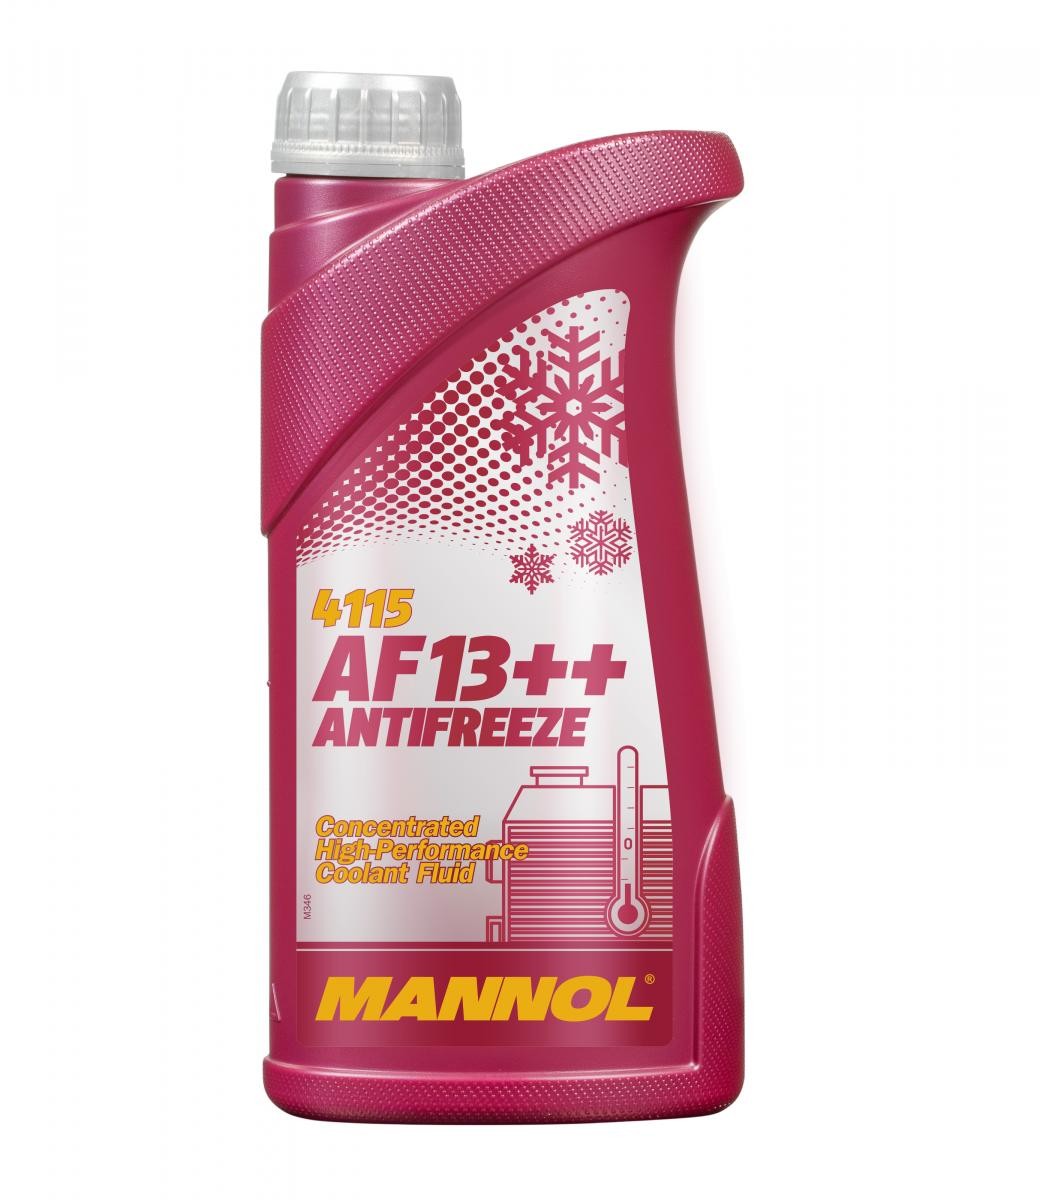 MVK FENIX Kühlmittel G12 Rot, 1l, -38(50/50) MANNOL AF13++, High-performance MN4115-1